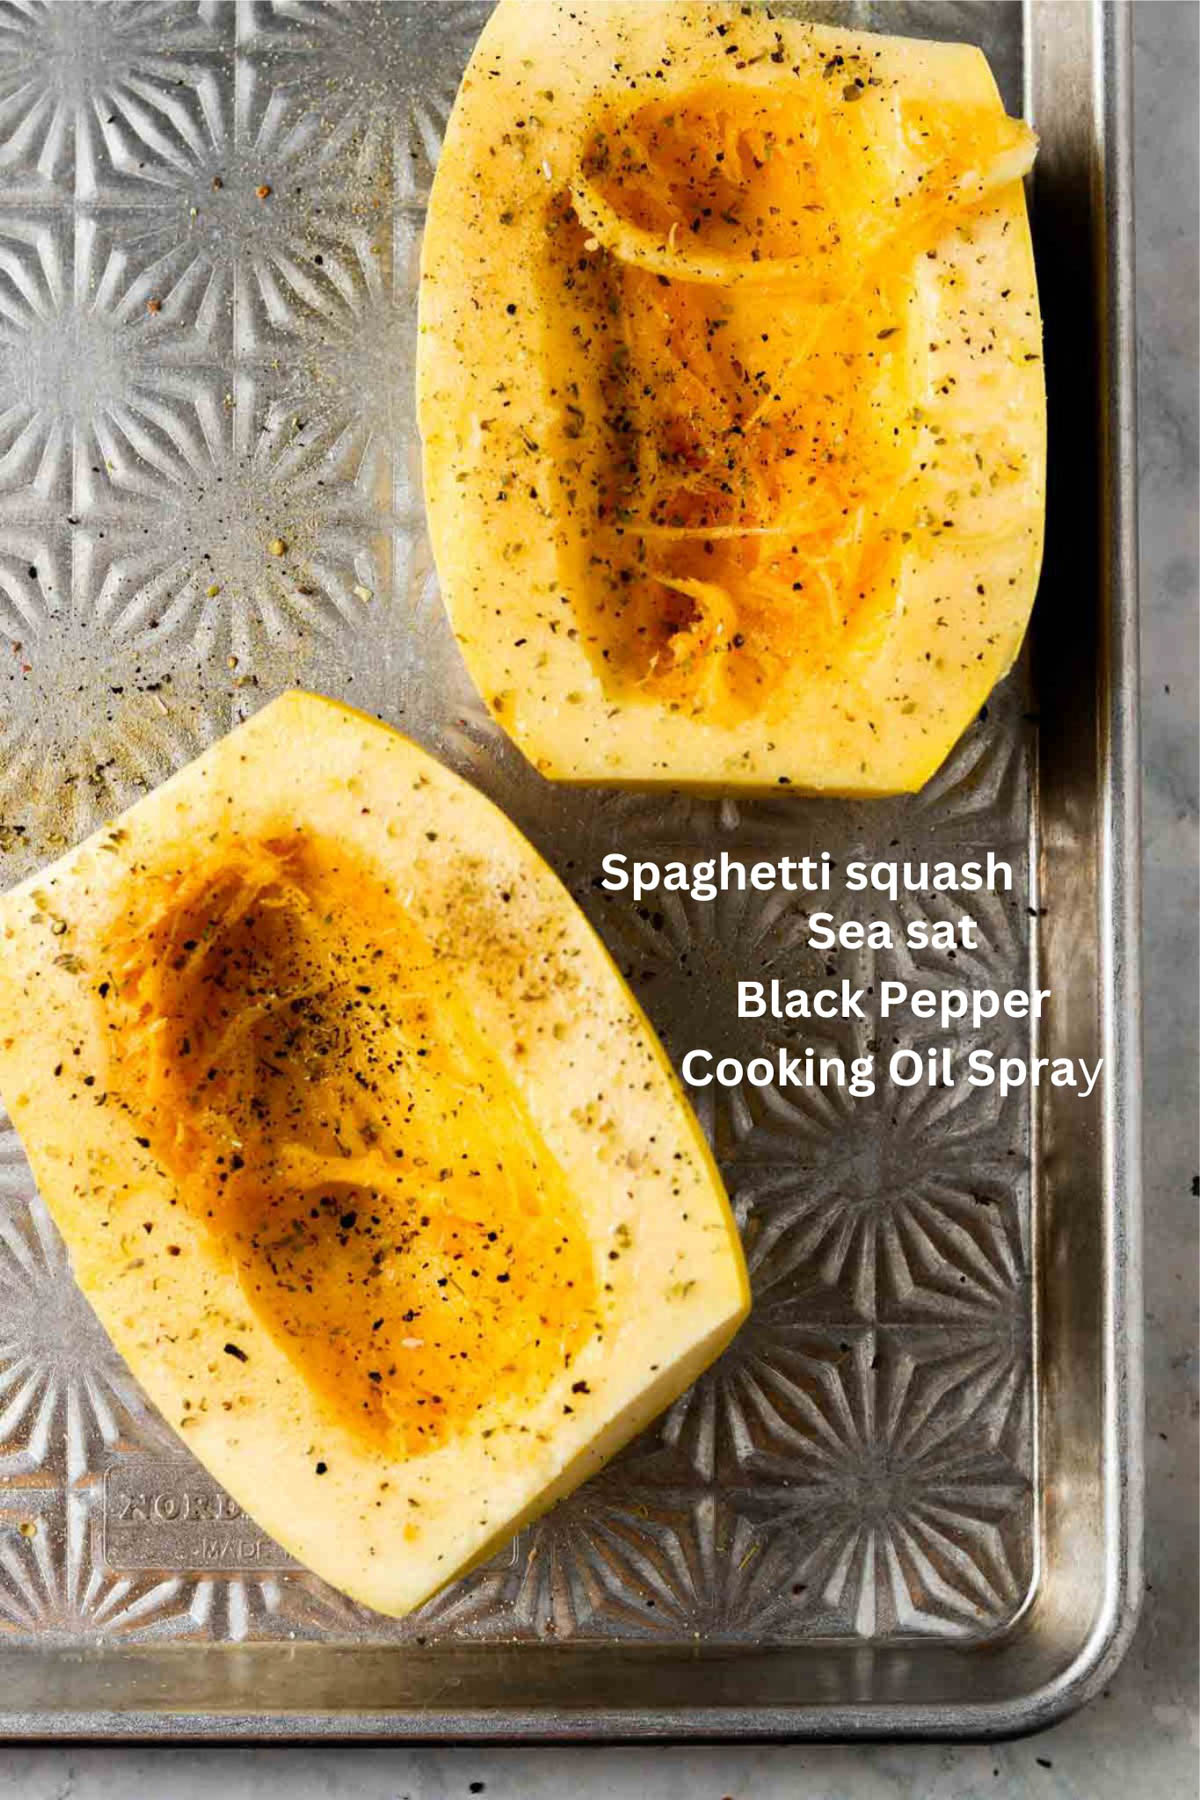 Labeled spaghetti squash ingredients photo.